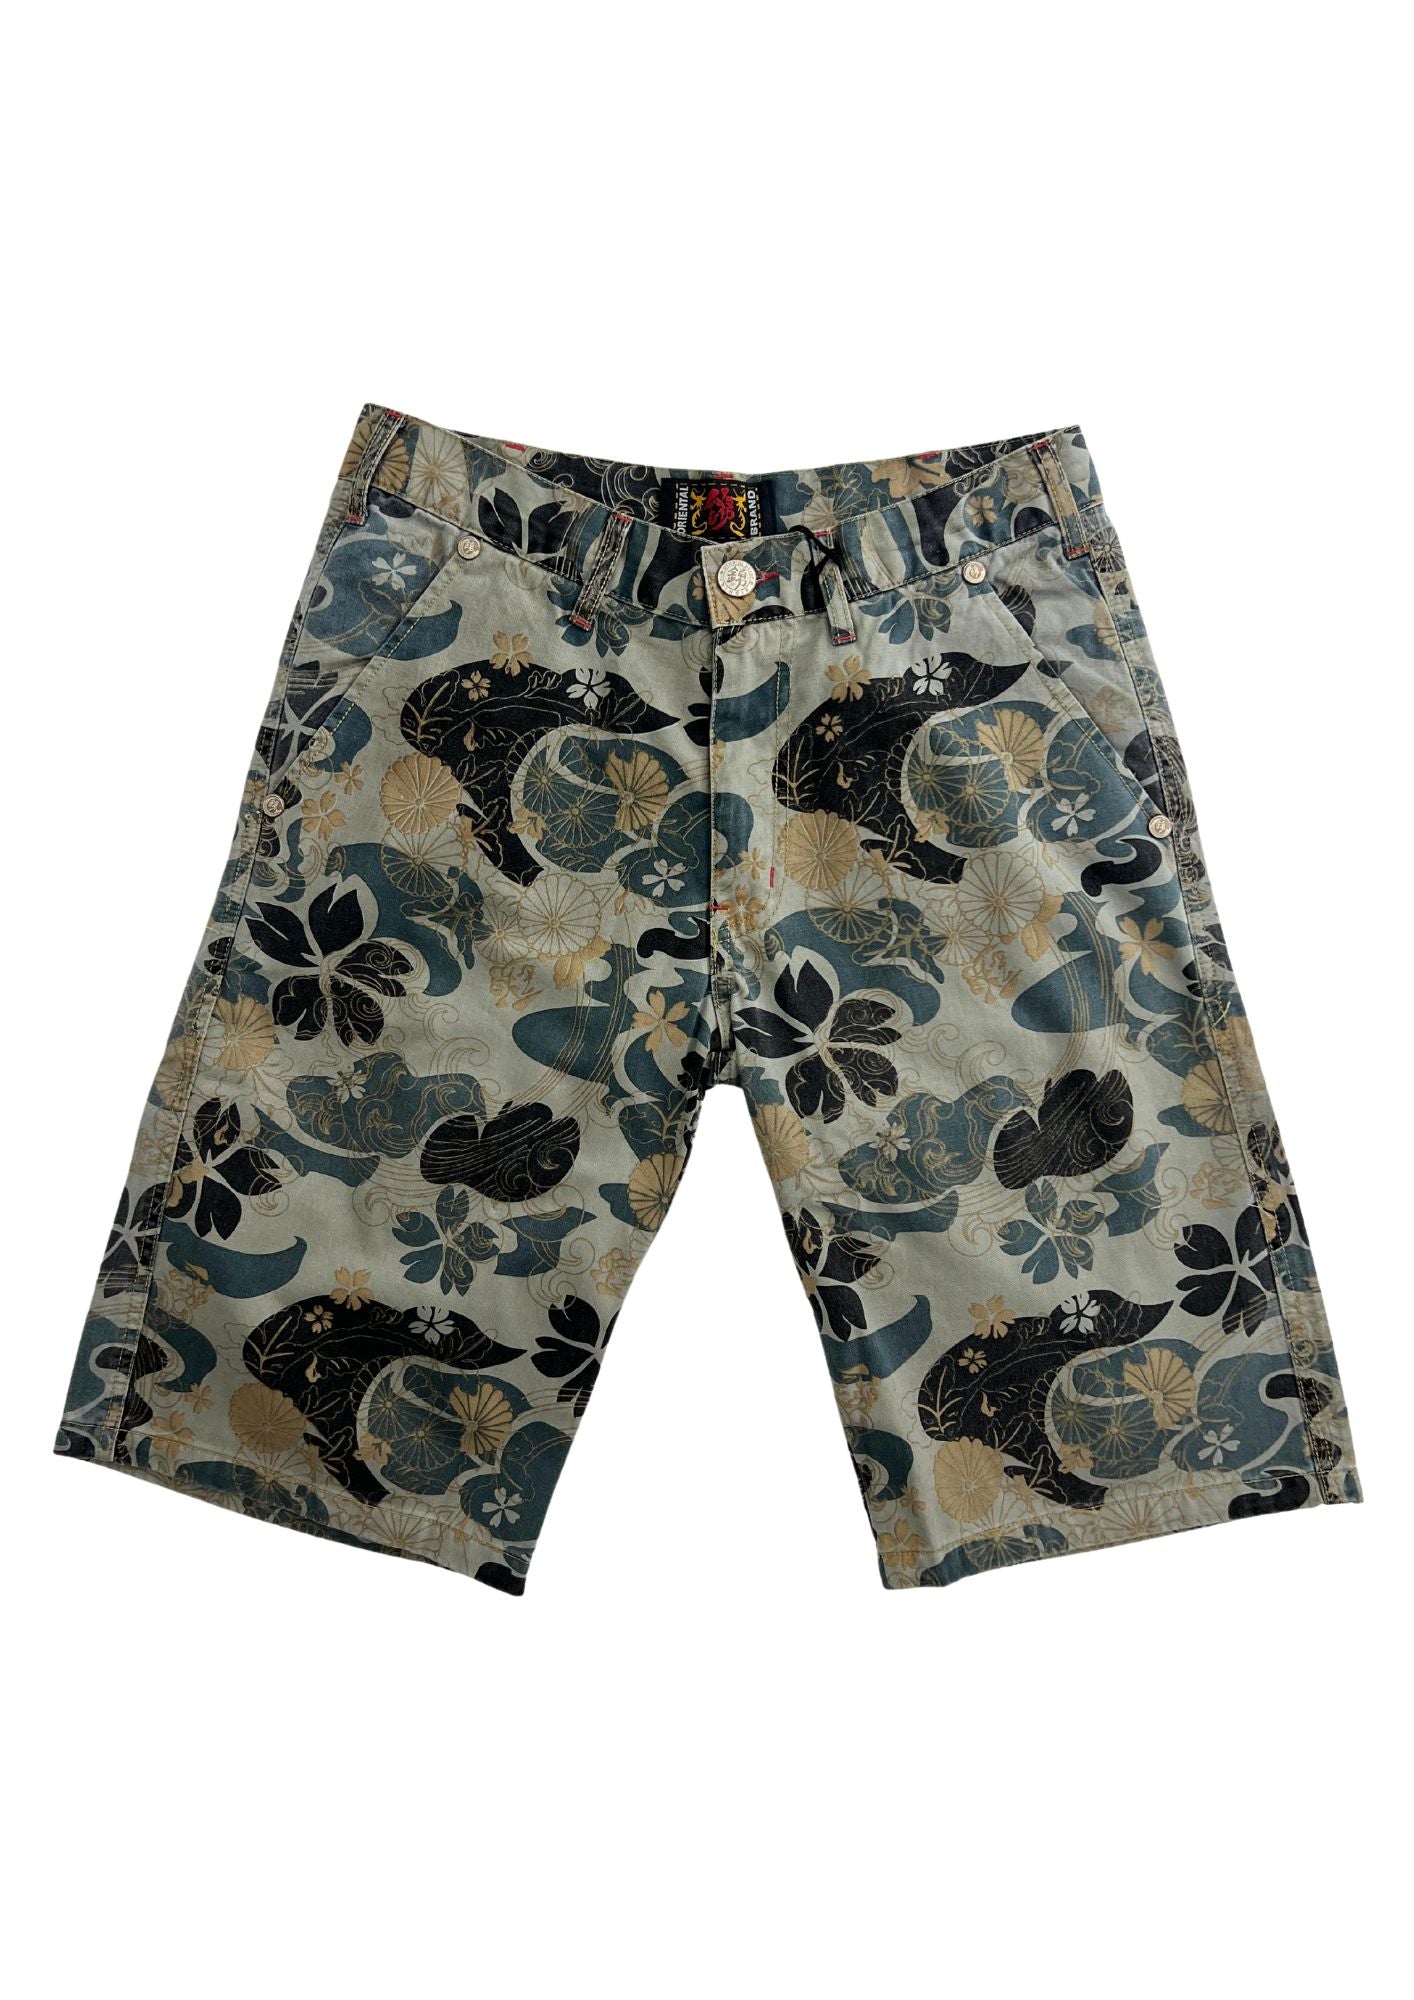 2010s Nishiki Japanese Pattern Shorts